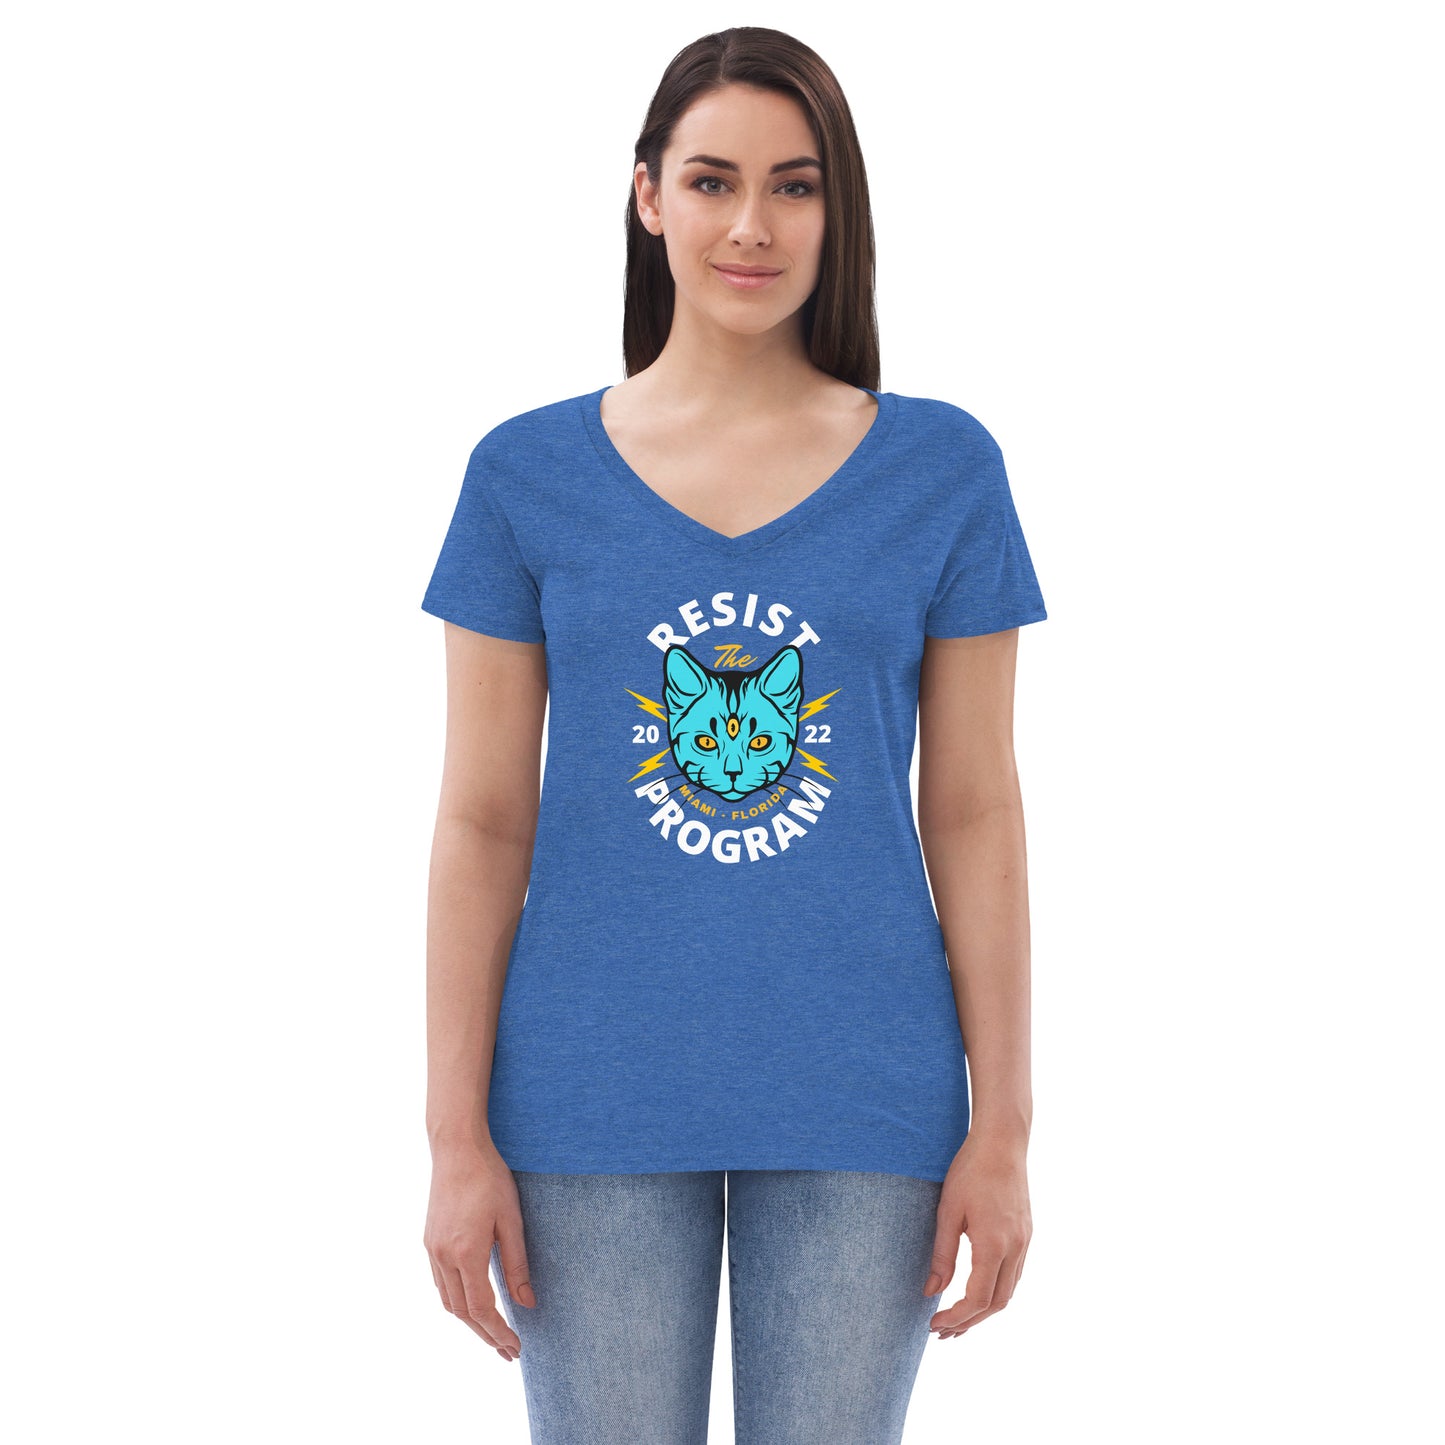 Resist – Women’s recycled v-neck t-shirt